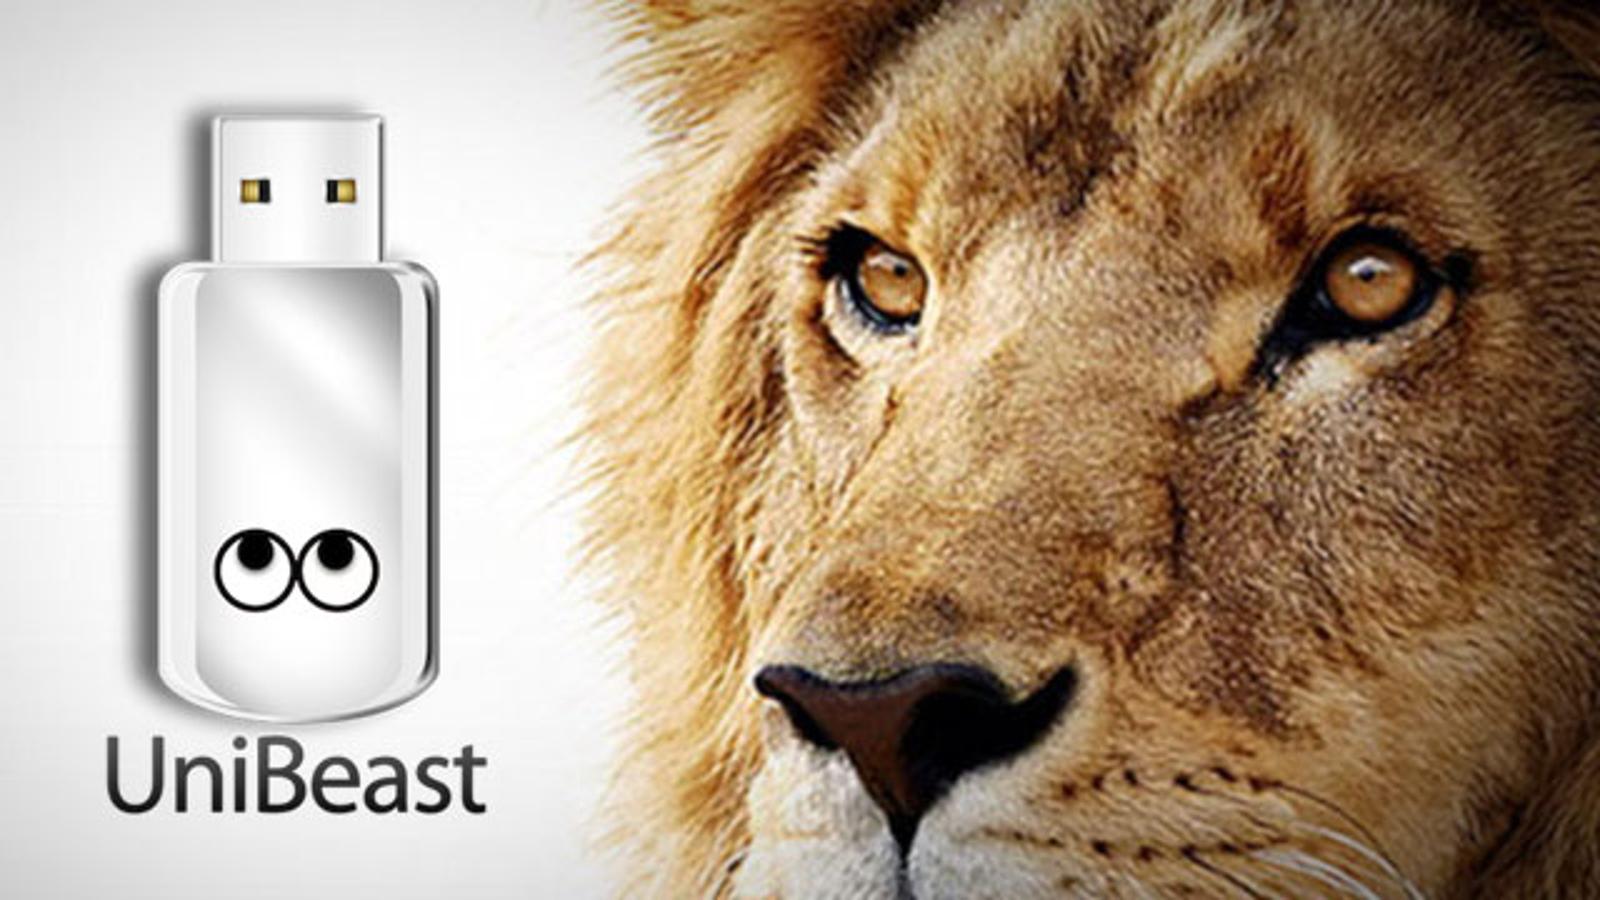 install mac os x lion download